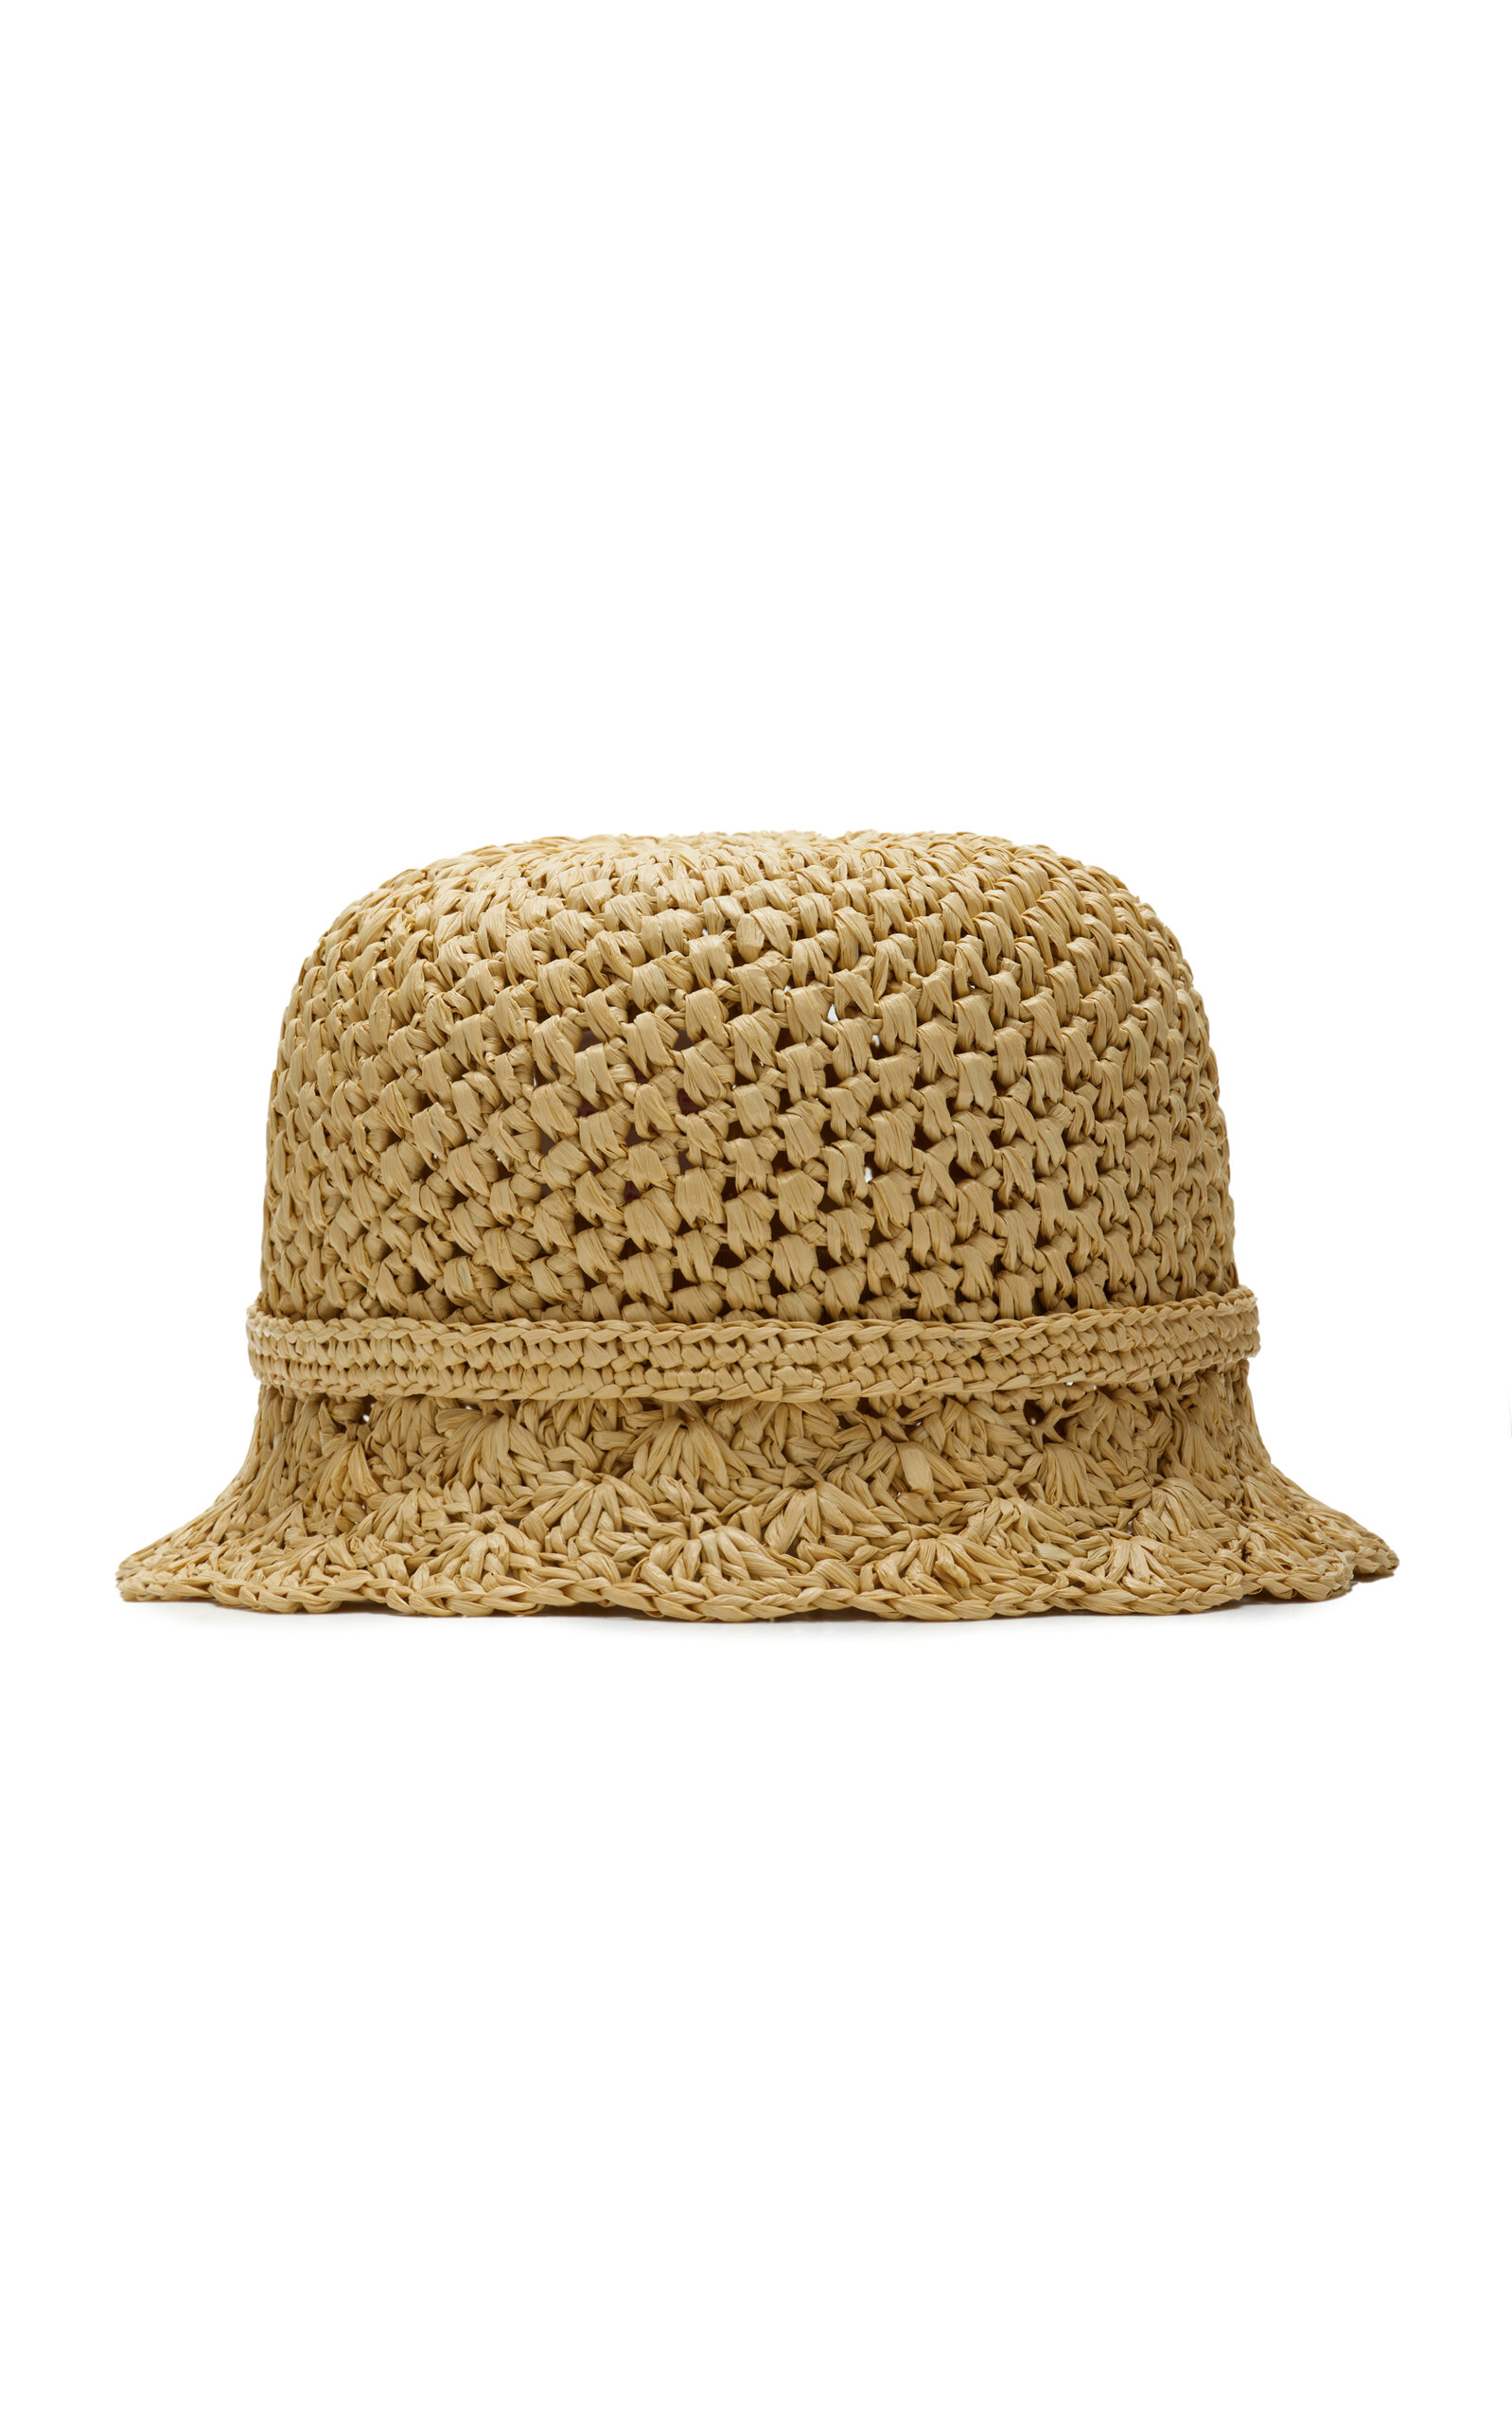 VLogo Crocheted-Raffia Bucket Hat